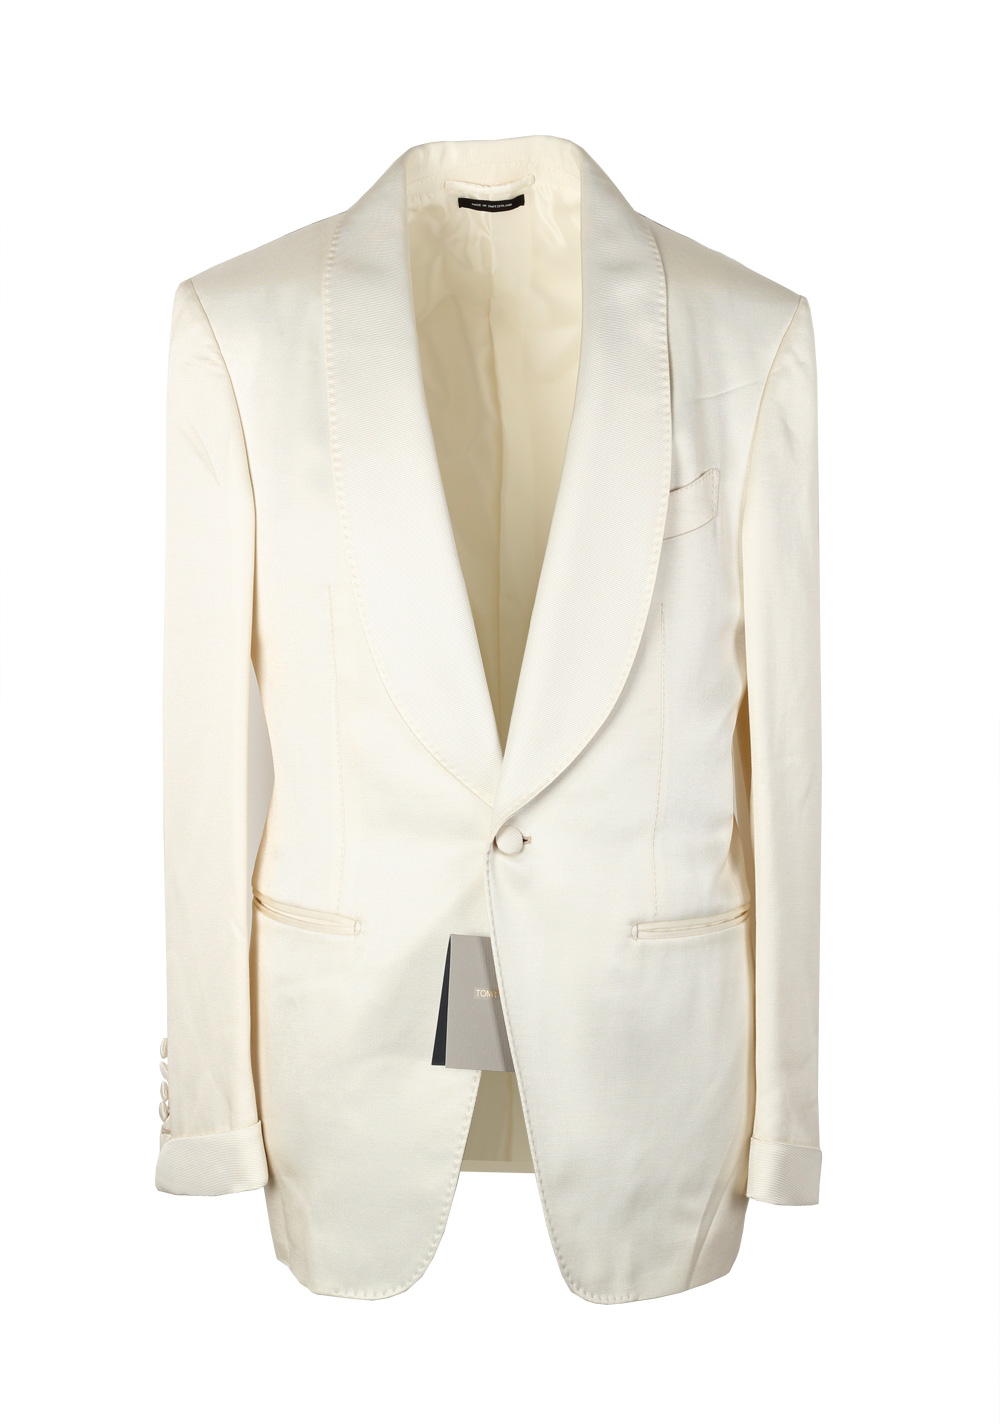 TOM FORD Shelton Ivory Sport Coat Tuxedo Dinner Jacket Size 46 / 36R U ...